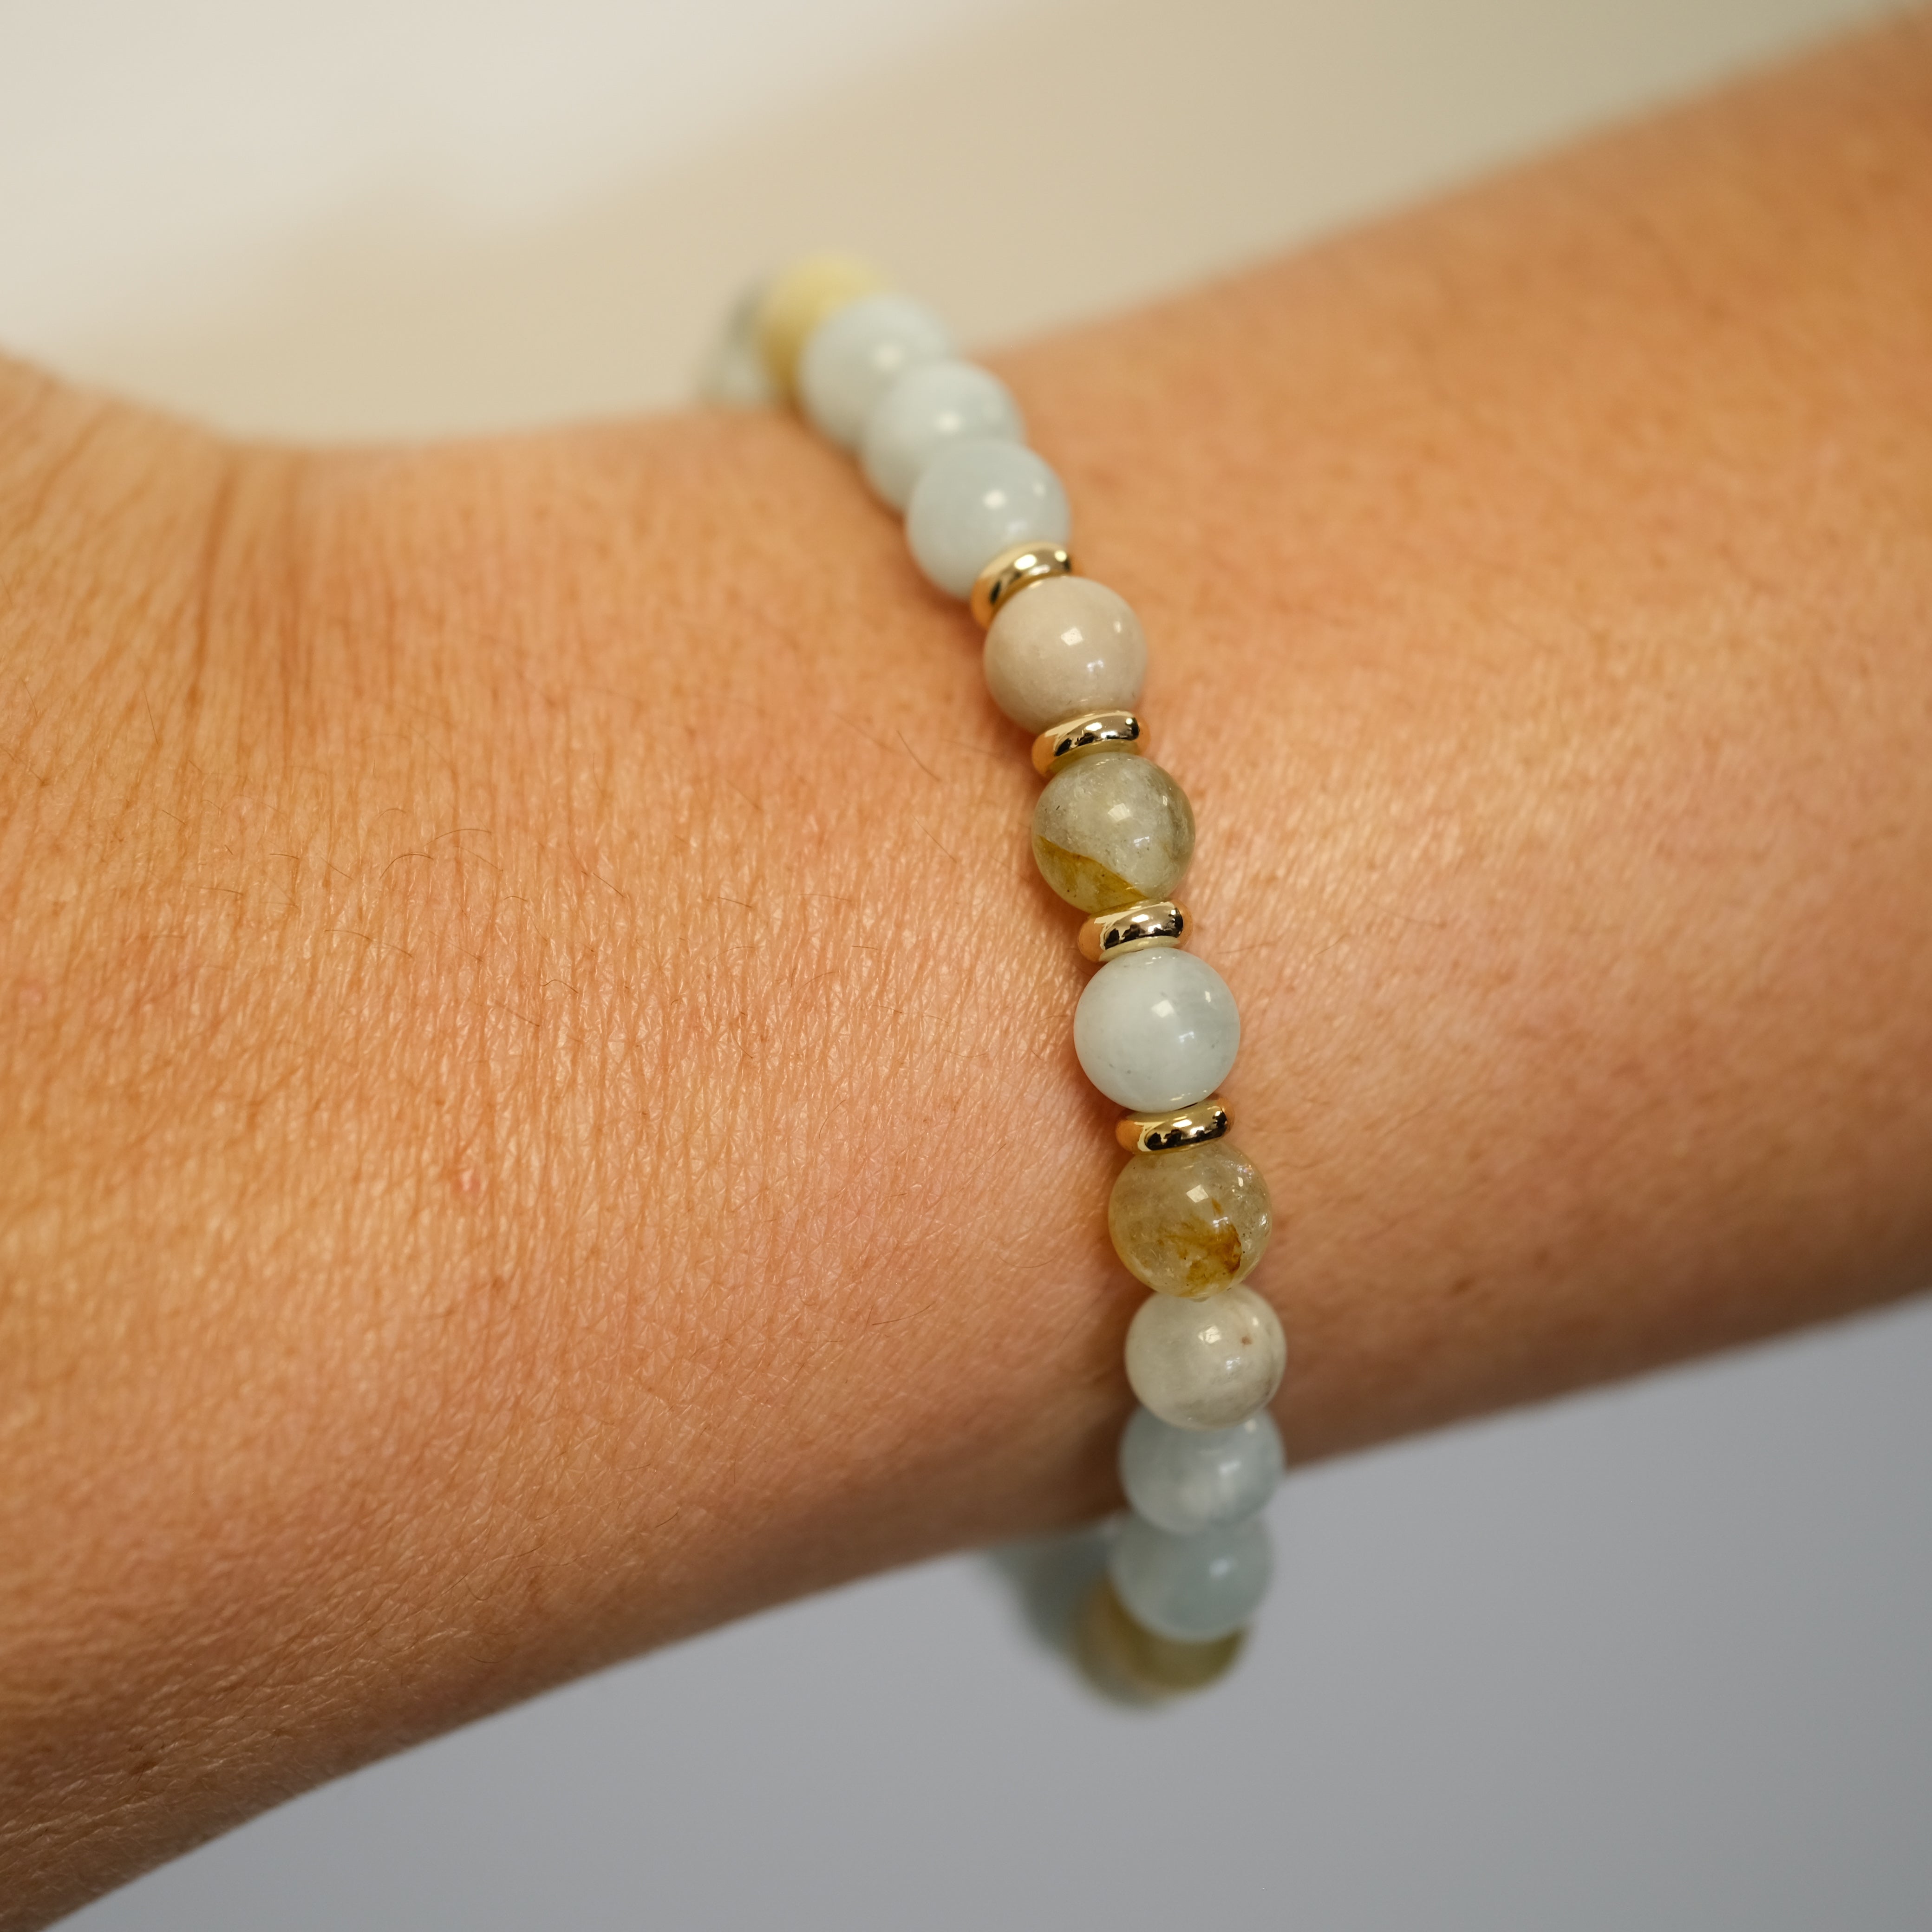 Aquamarine gemstone bracelet in 6mm beads worn on a model's wrist